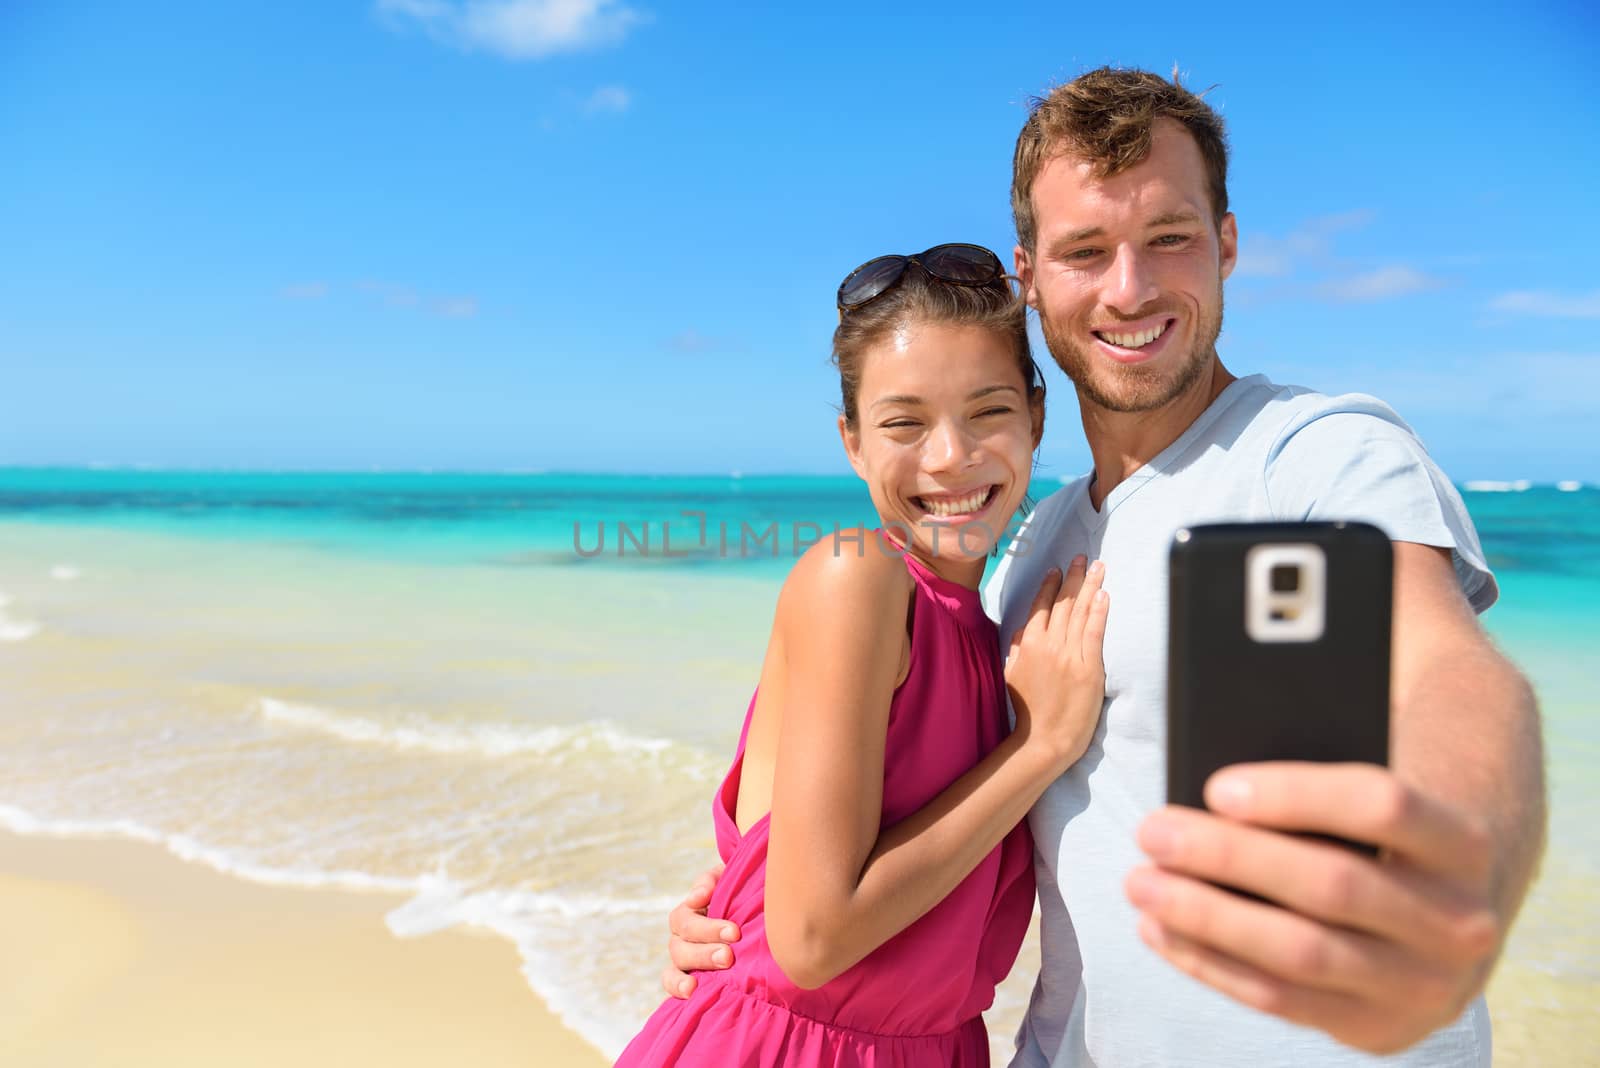 Beach vacation couple taking selfie on smartphone by Maridav